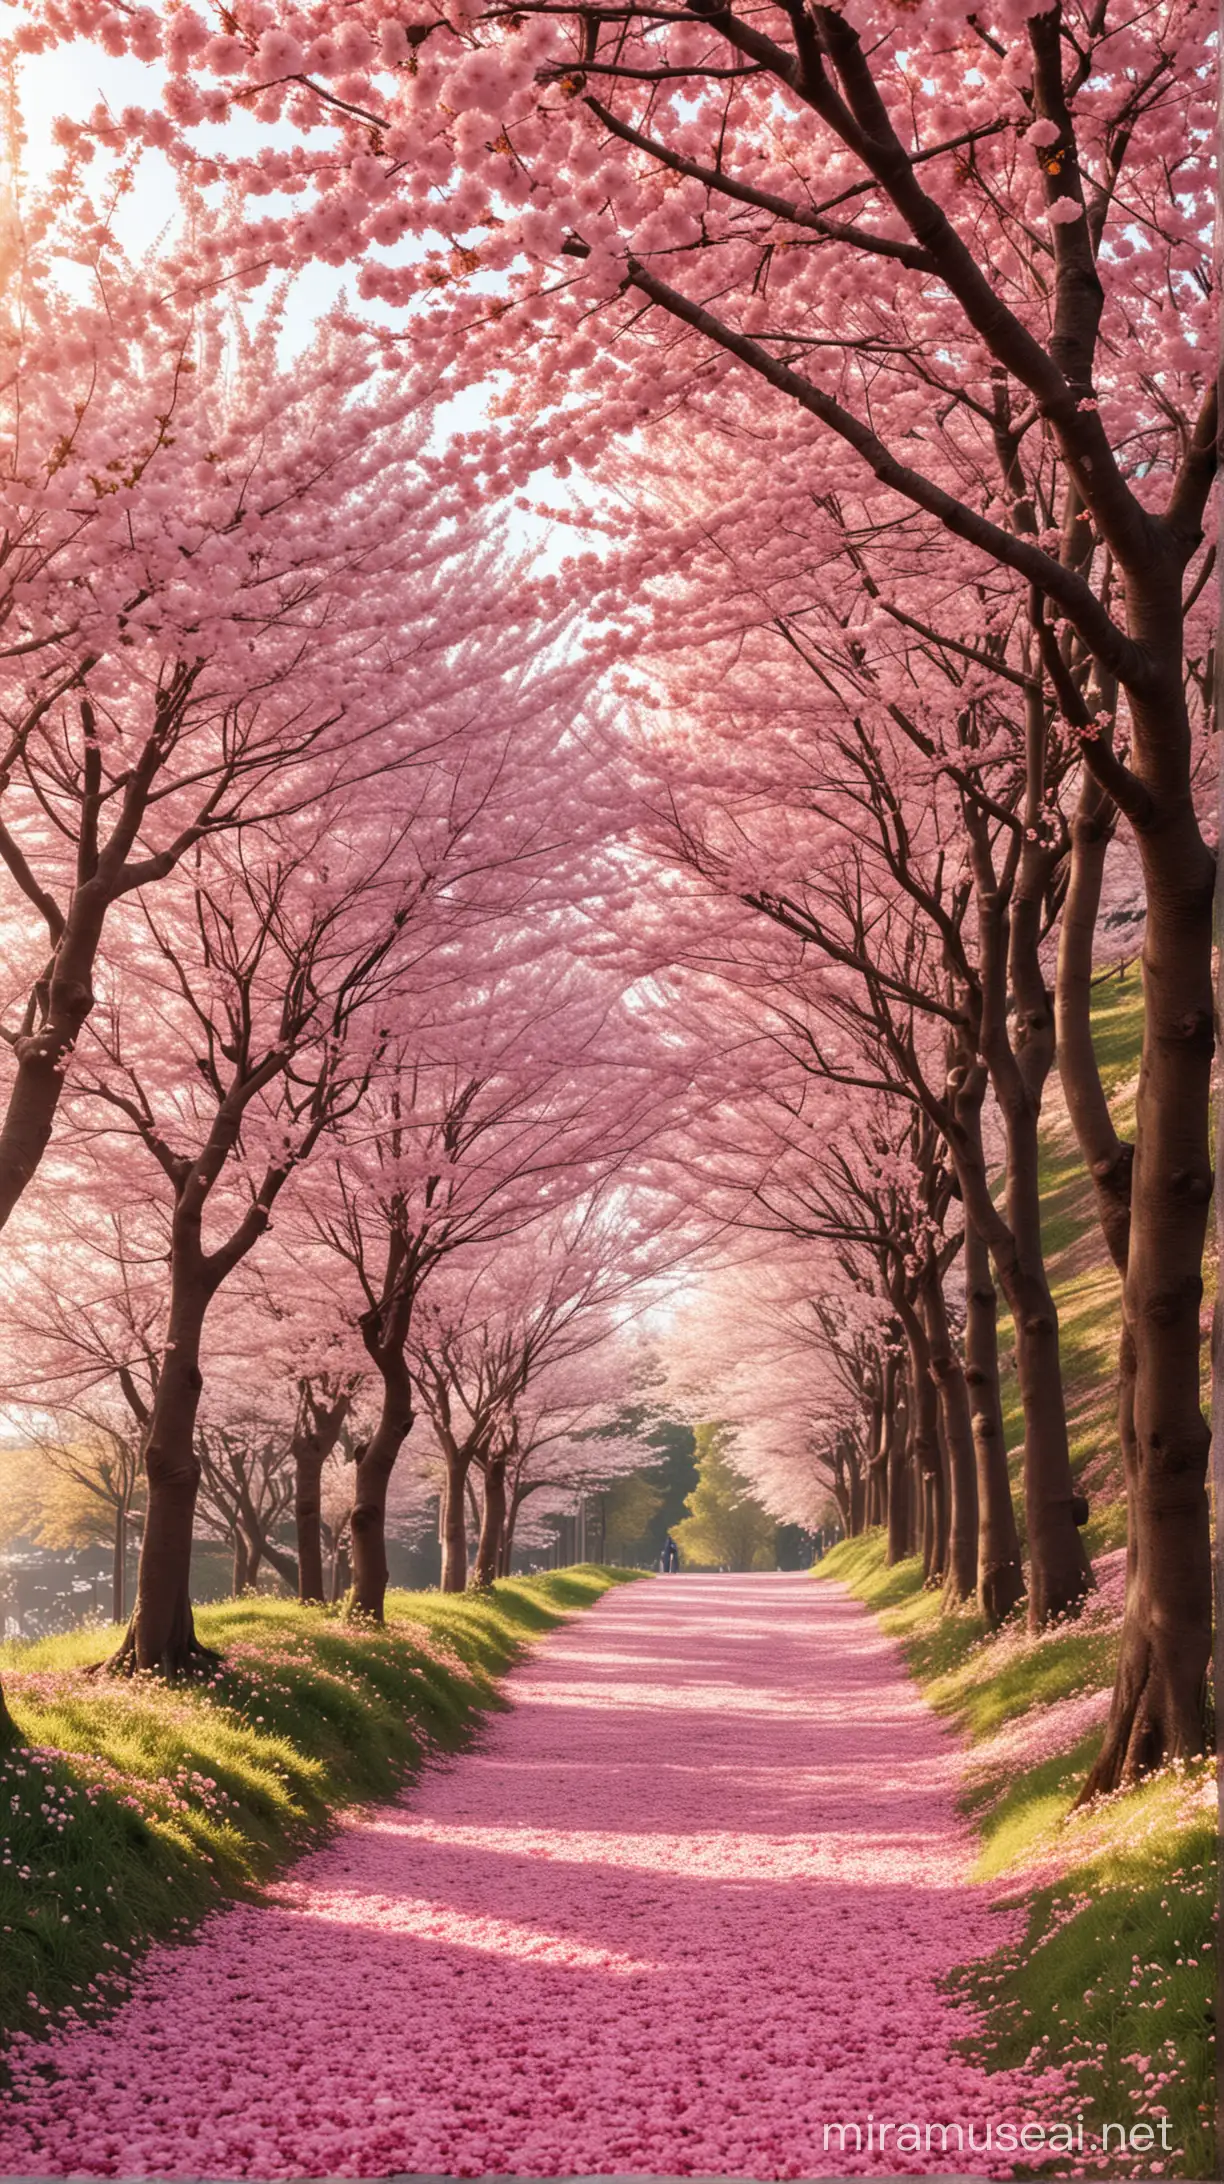 Enchanting Cherry Blossom Hill Landscape Serene Scene with Sunlight Filtering Through Petals